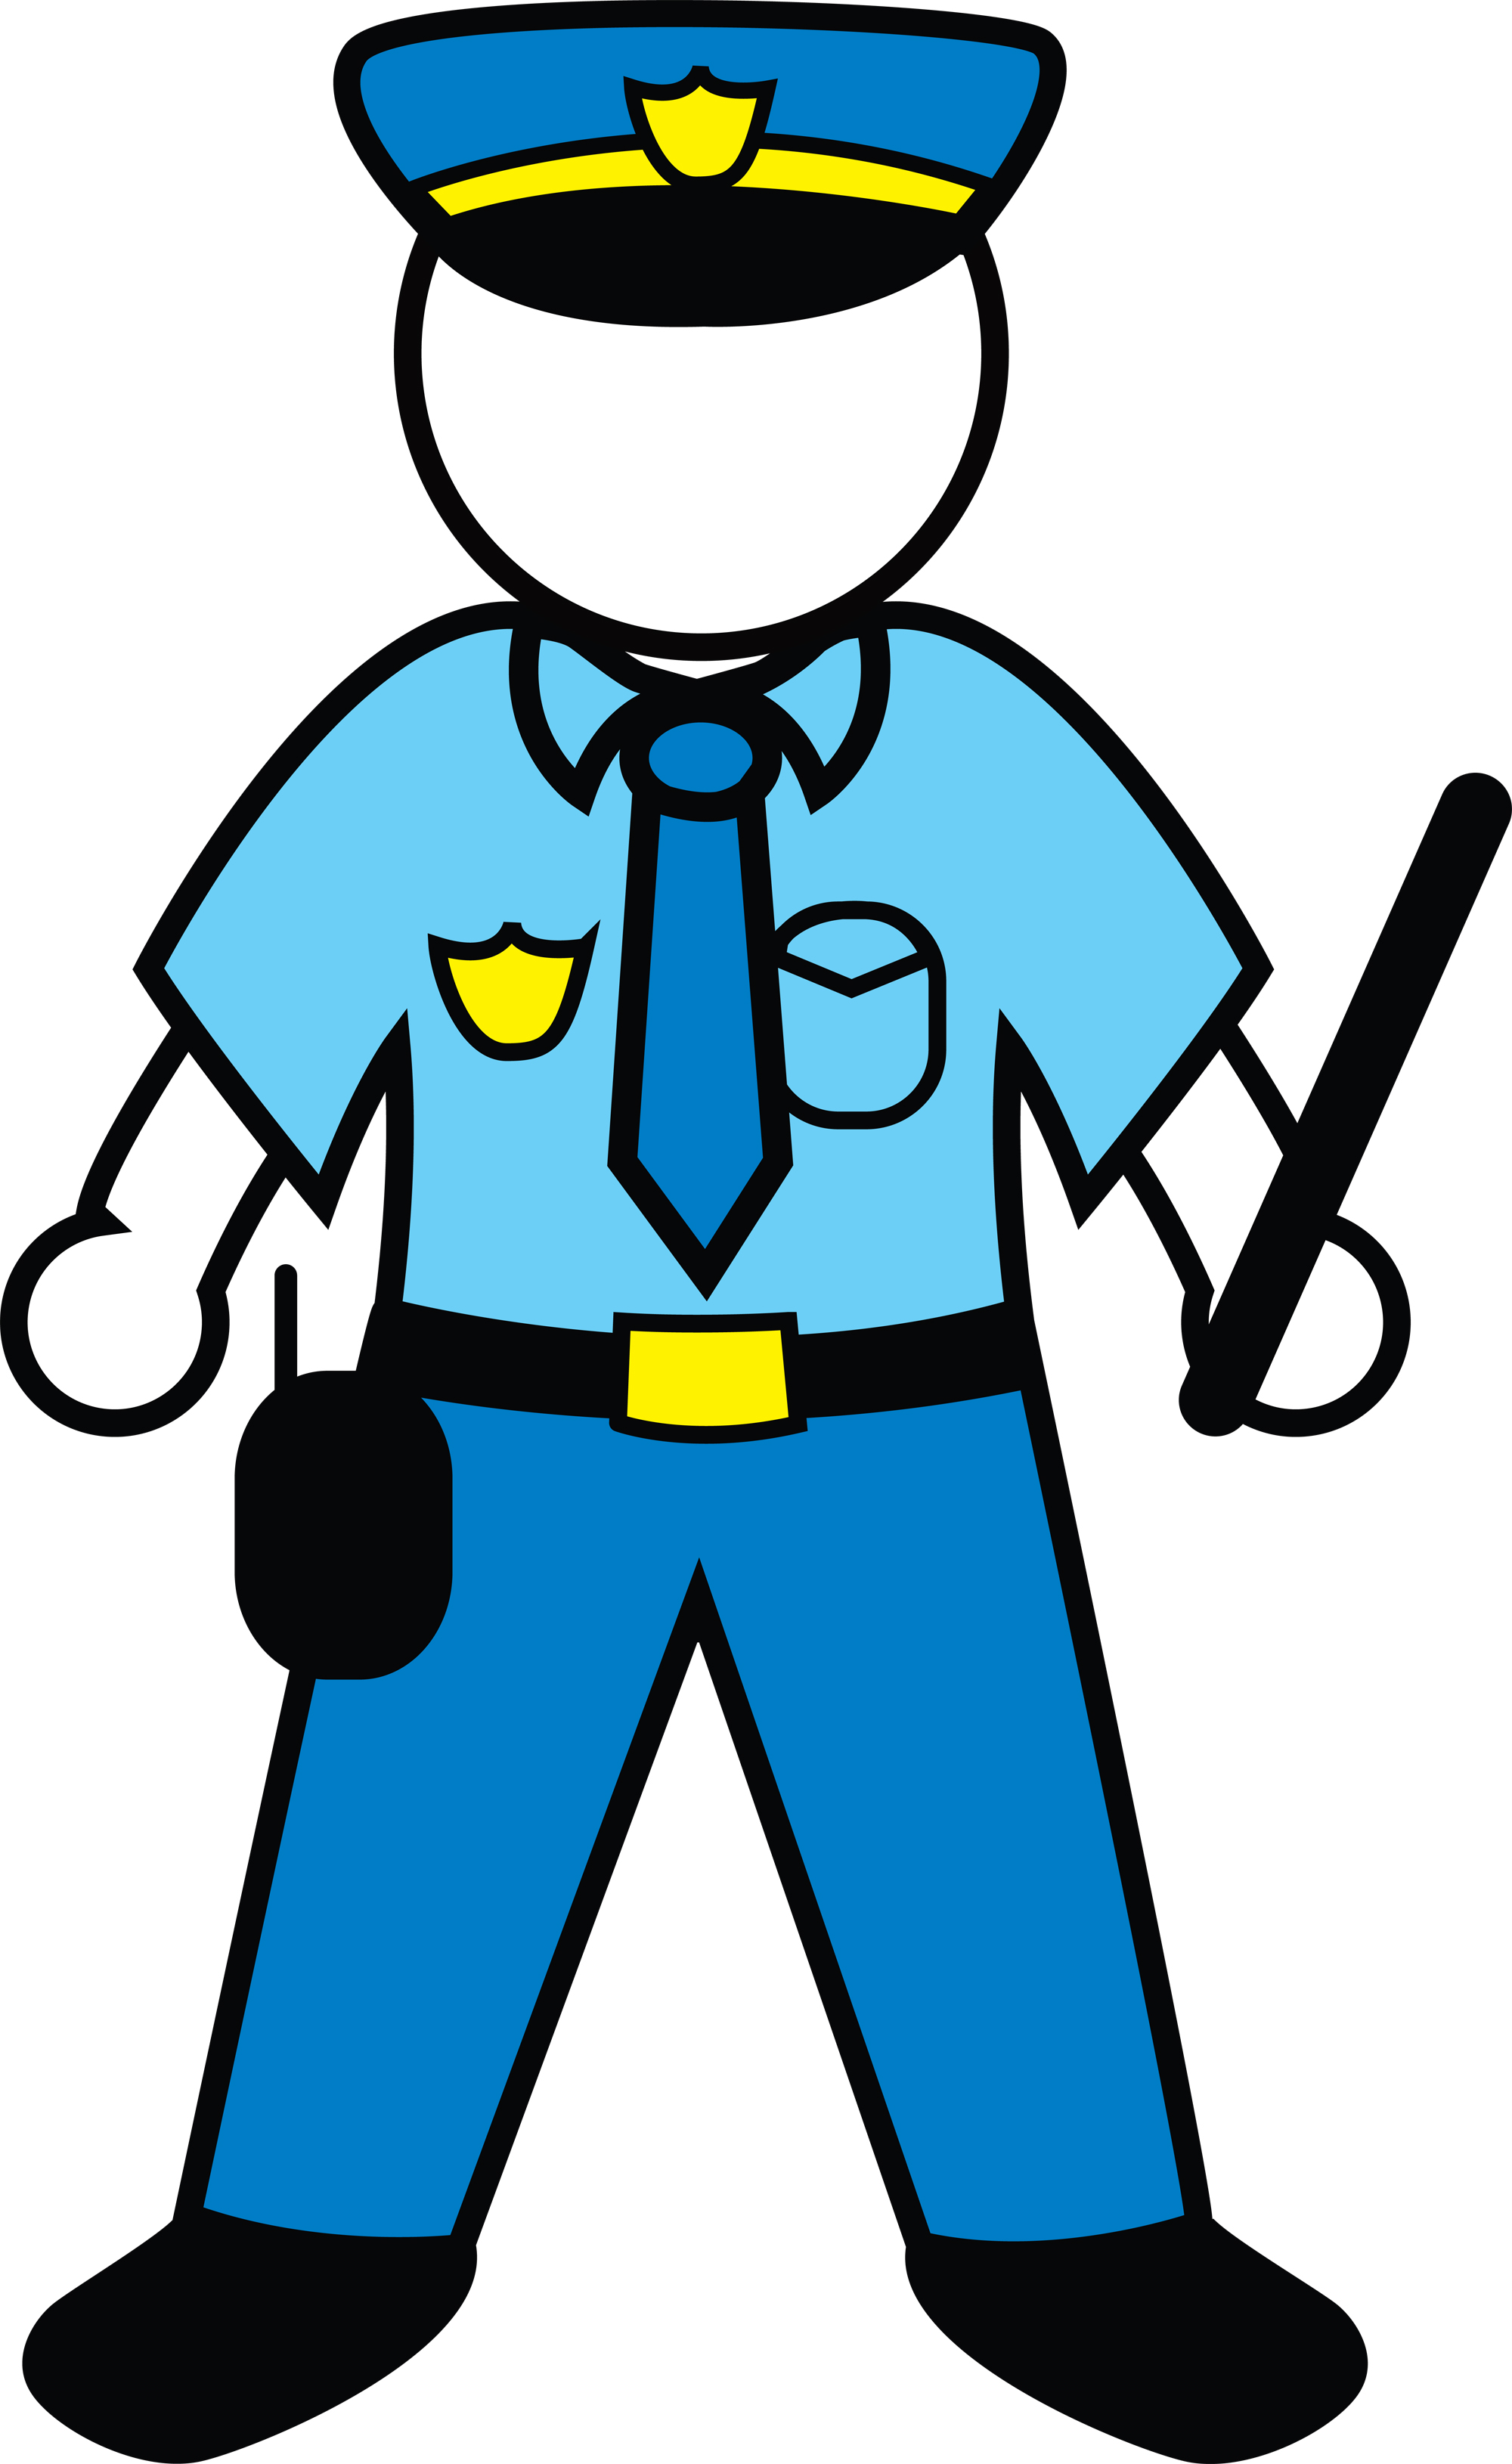 Clip art police officer uniform clipart kid 4 clipartbarn